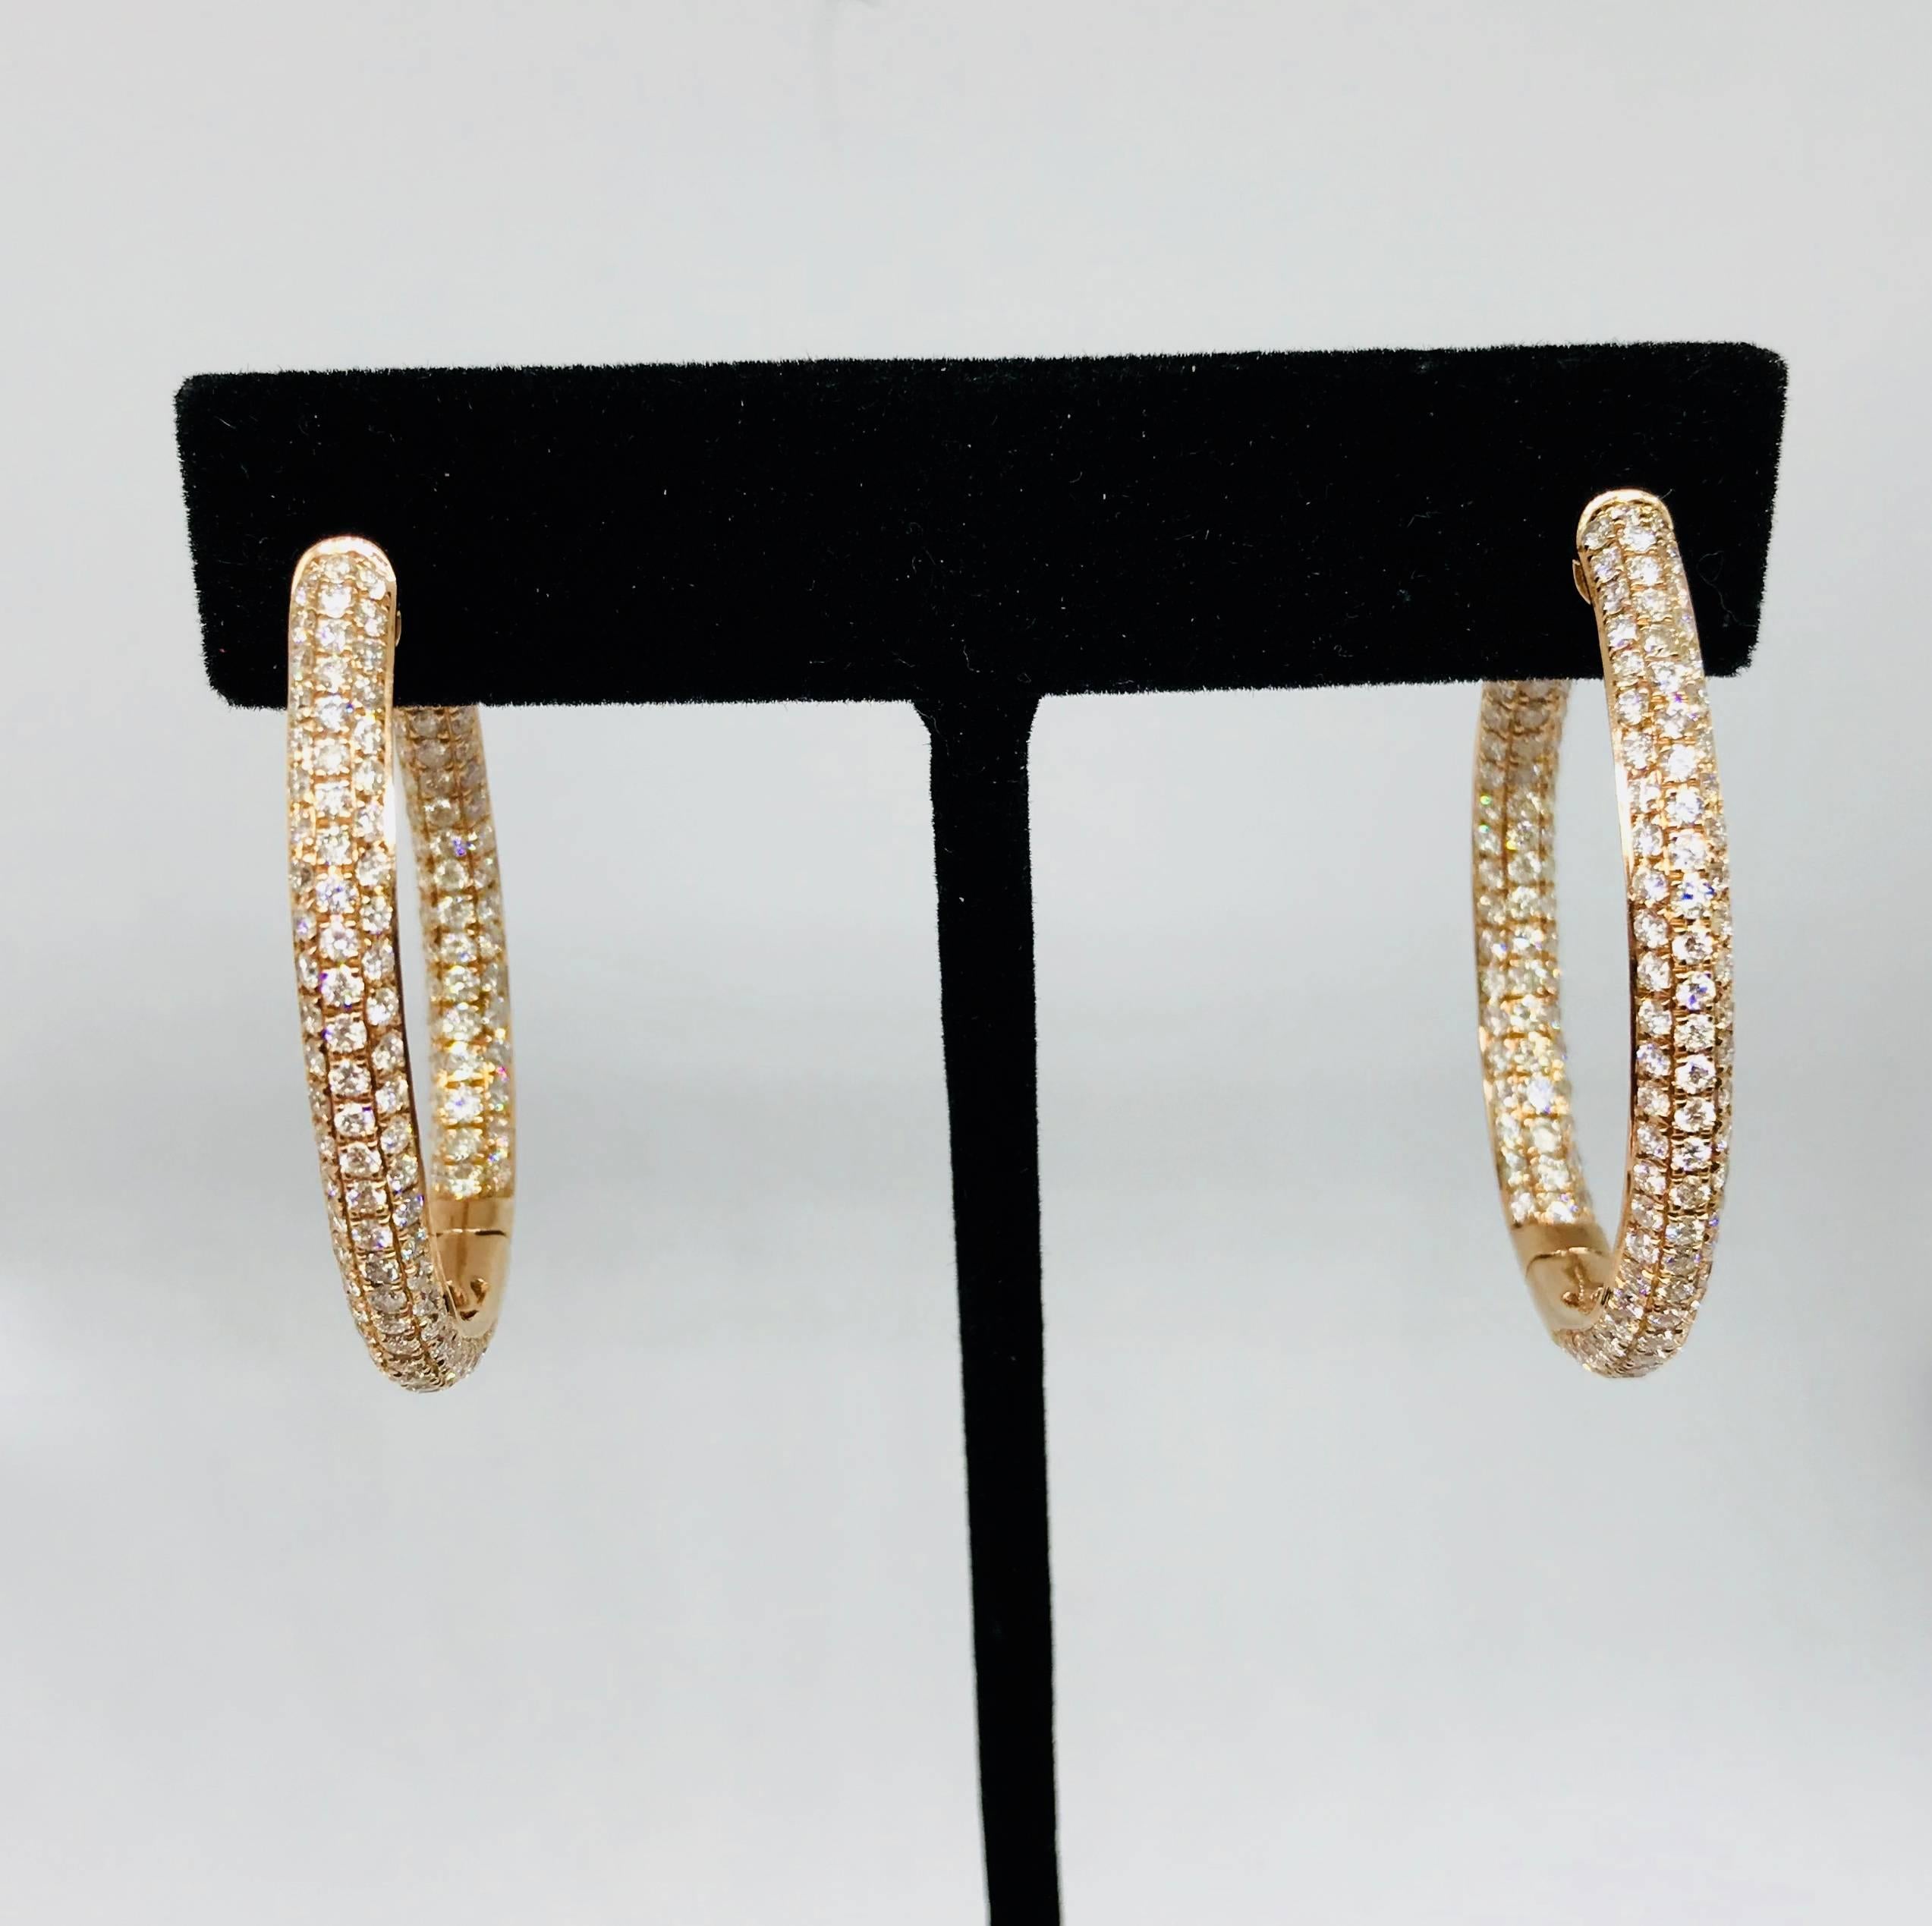 Round Cut Diamond Oval Hoop Earrings in 14k Yellow Gold 11.94 Grams